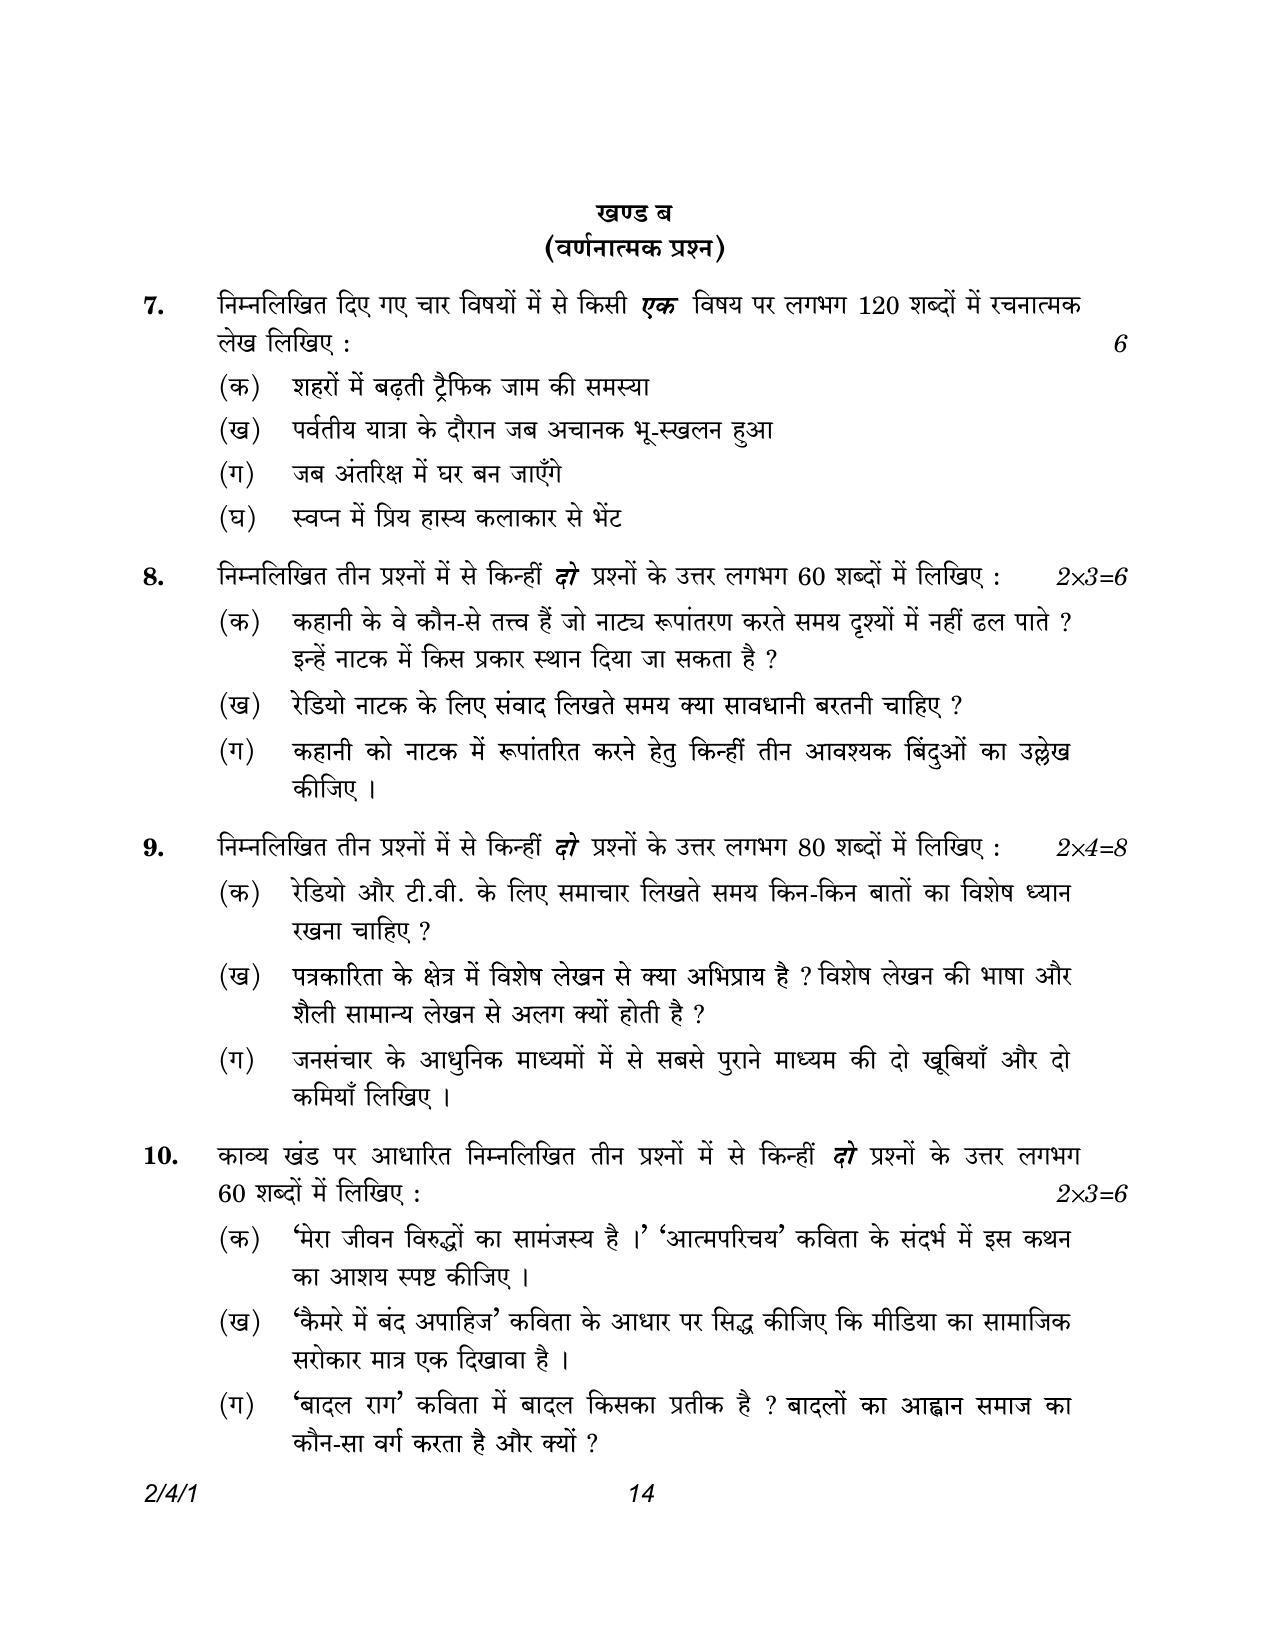 CBSE Class 12 2-4-1 Hindi Core version 2023 Question Paper - Page 14